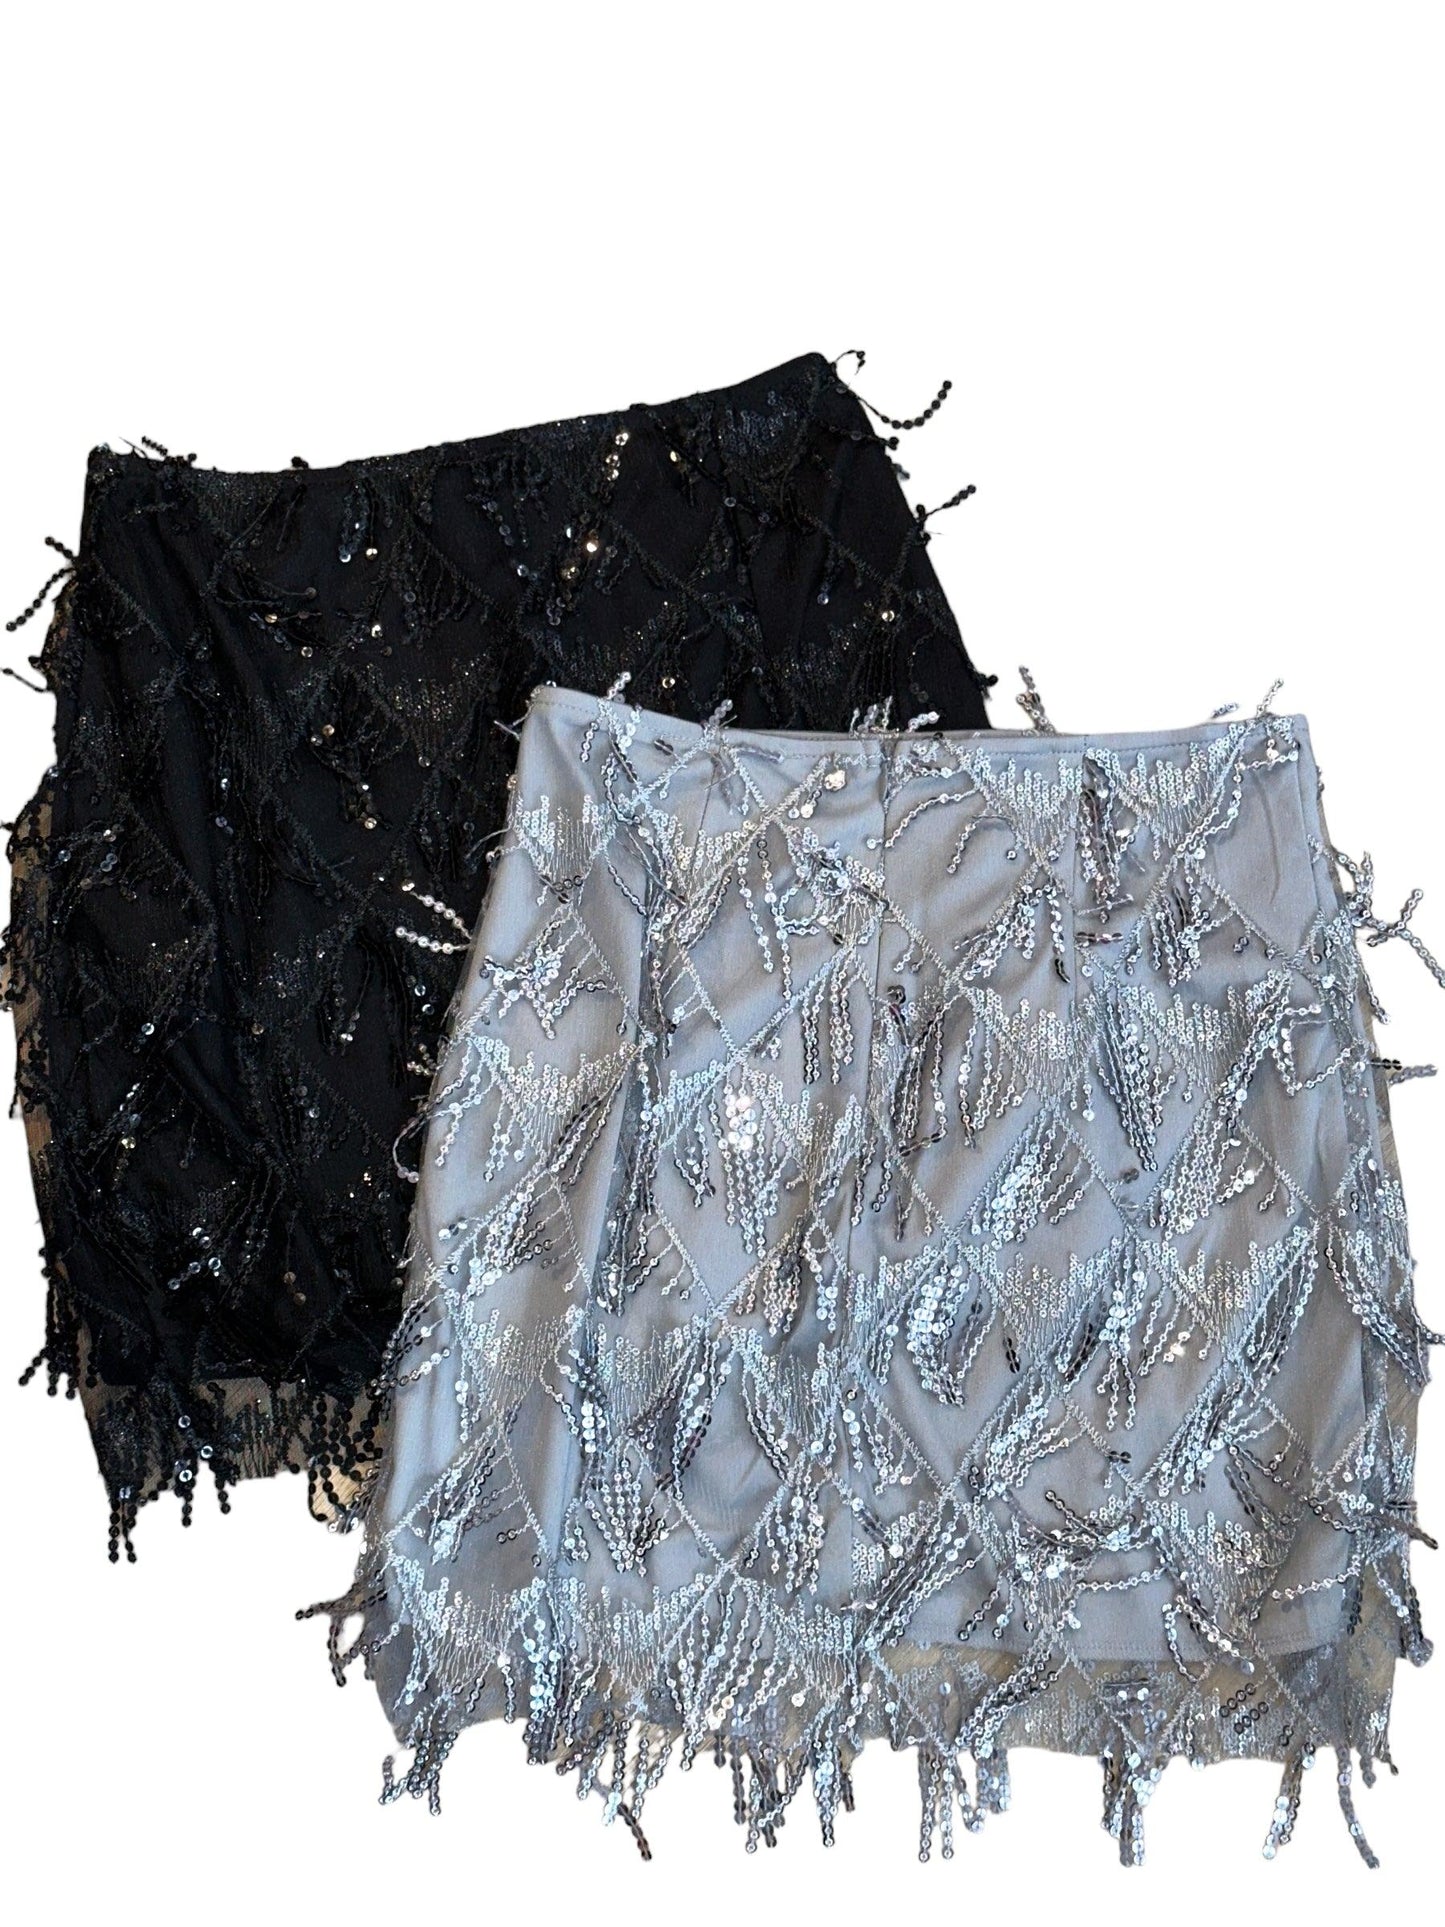 Sparkle Sequin Fringe Mini Skirt - The Salty Mare